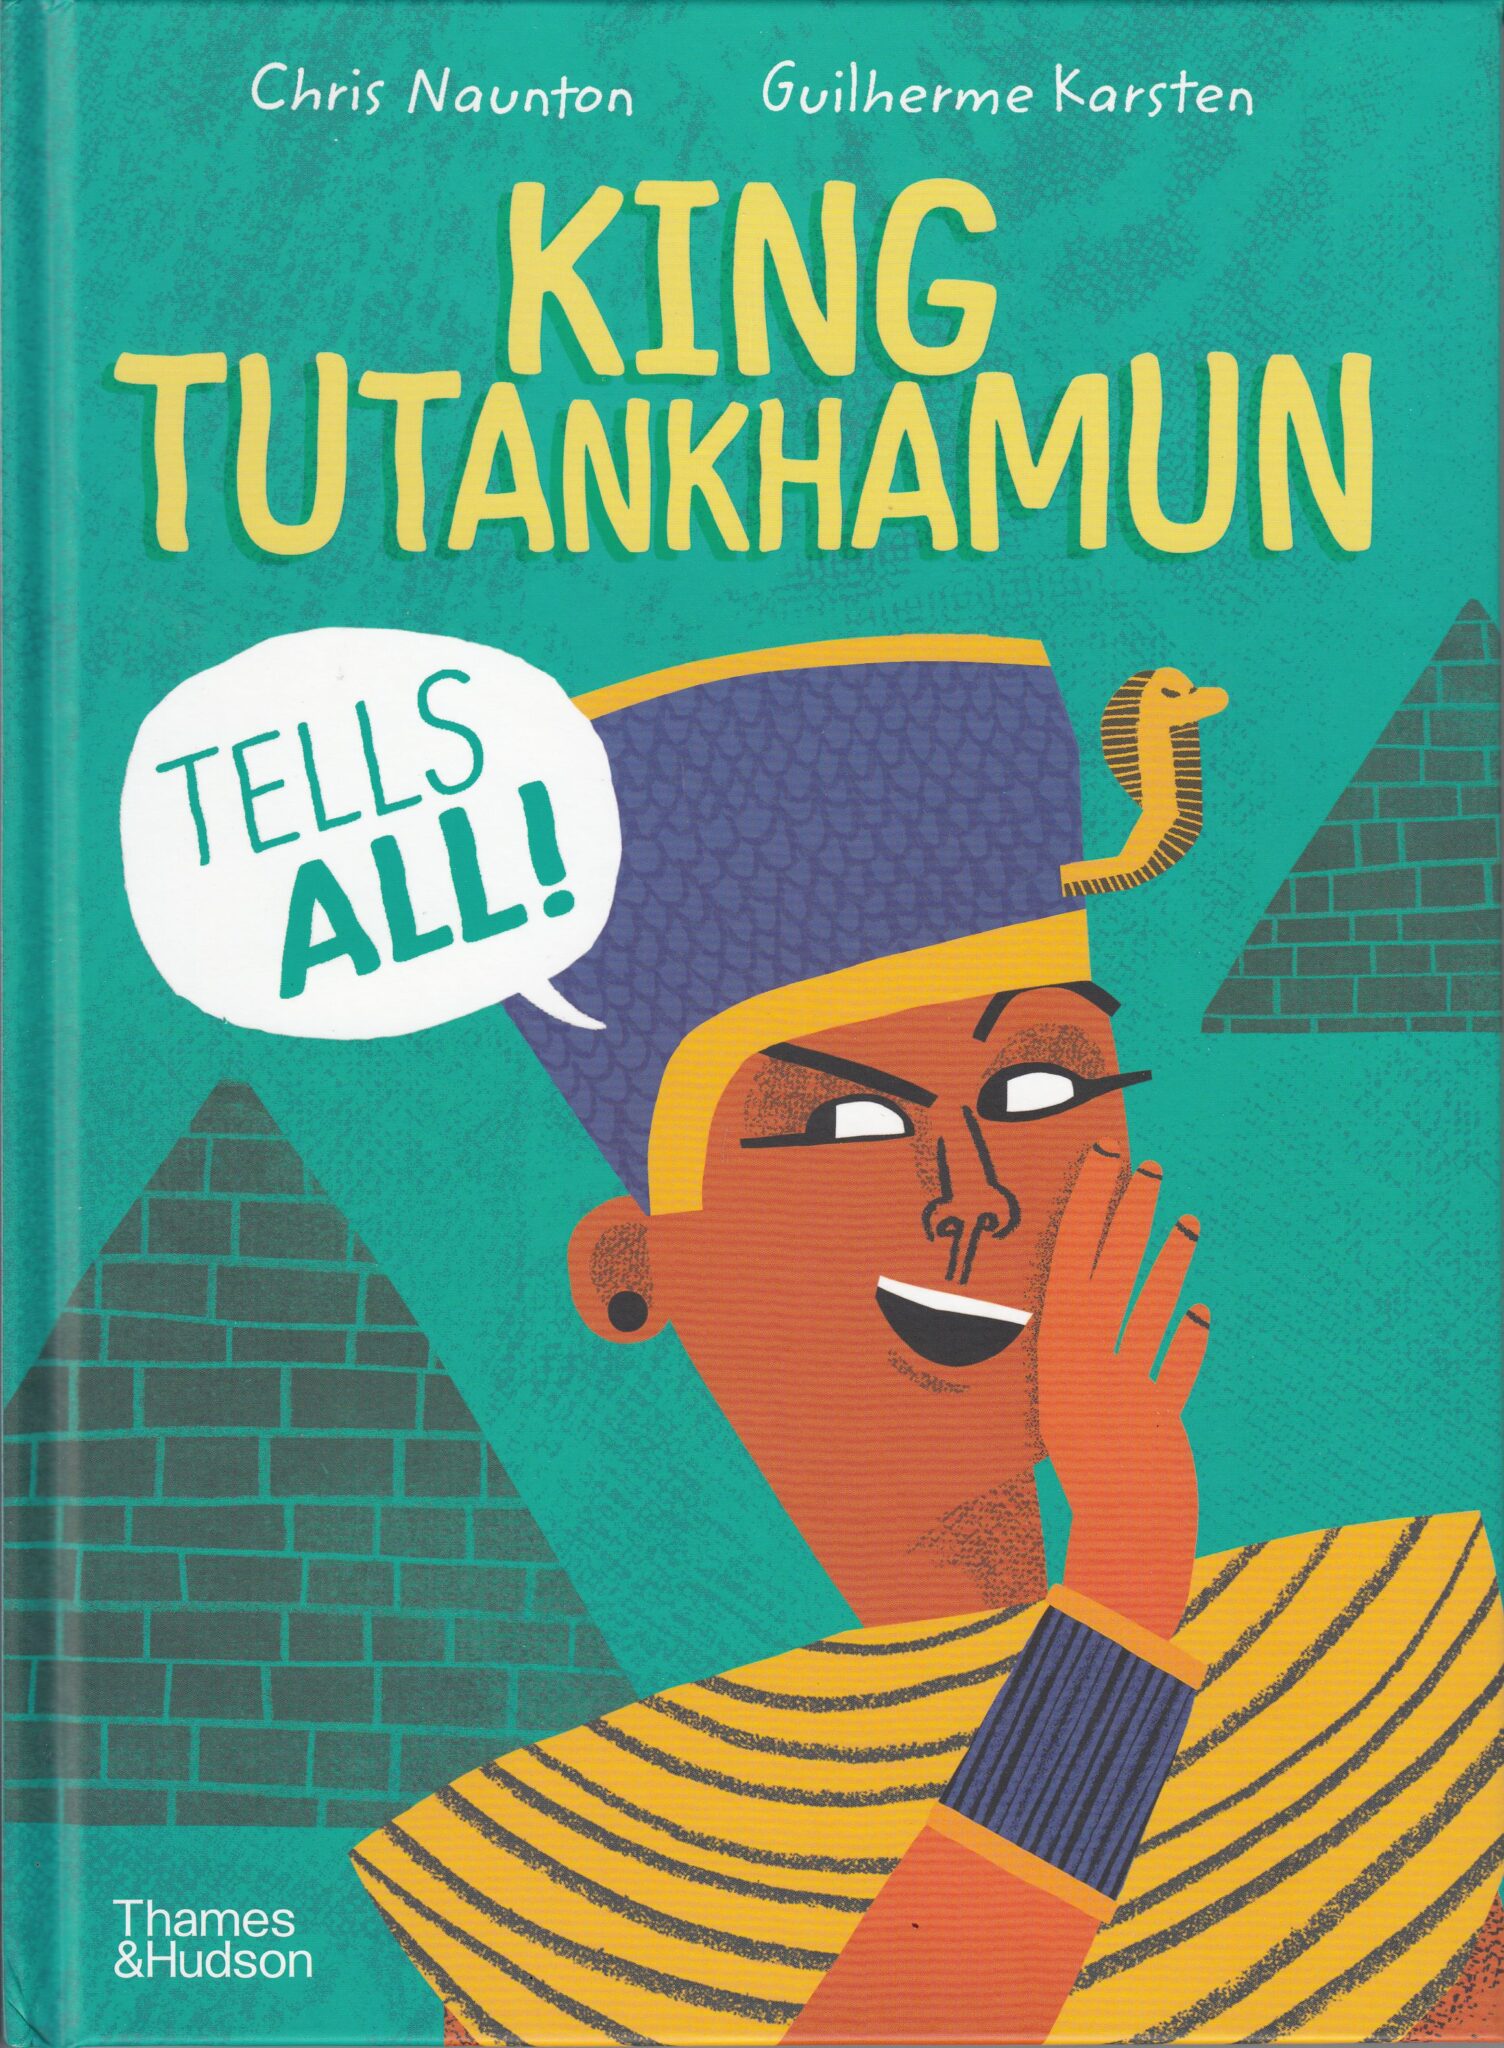 King Tutankhamun Tells All børnebog Glyptoteket